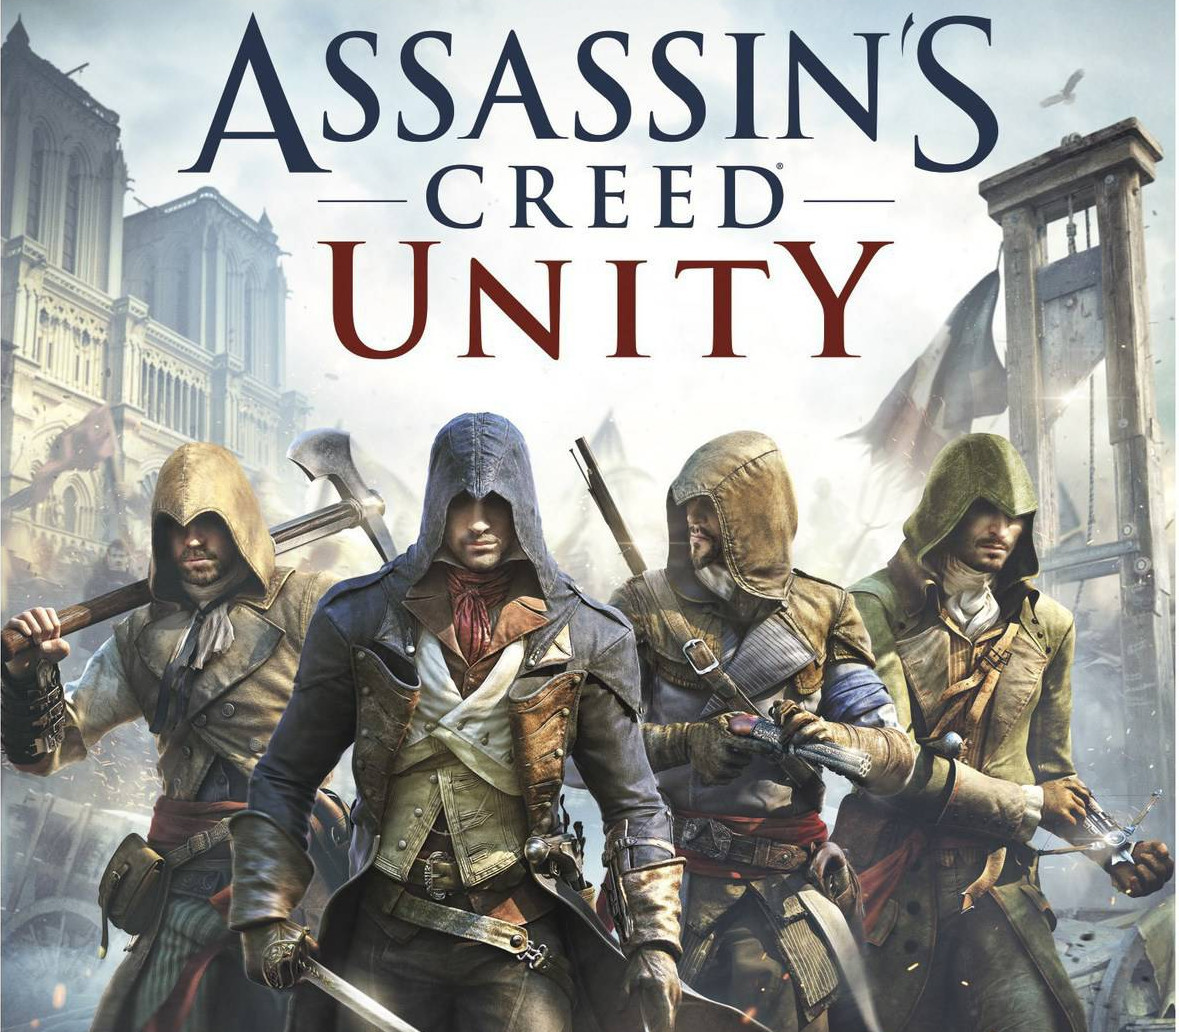 Assassin's Creed Unity - Prussian Waistcoat DLC Ubisoft Connect CD Key